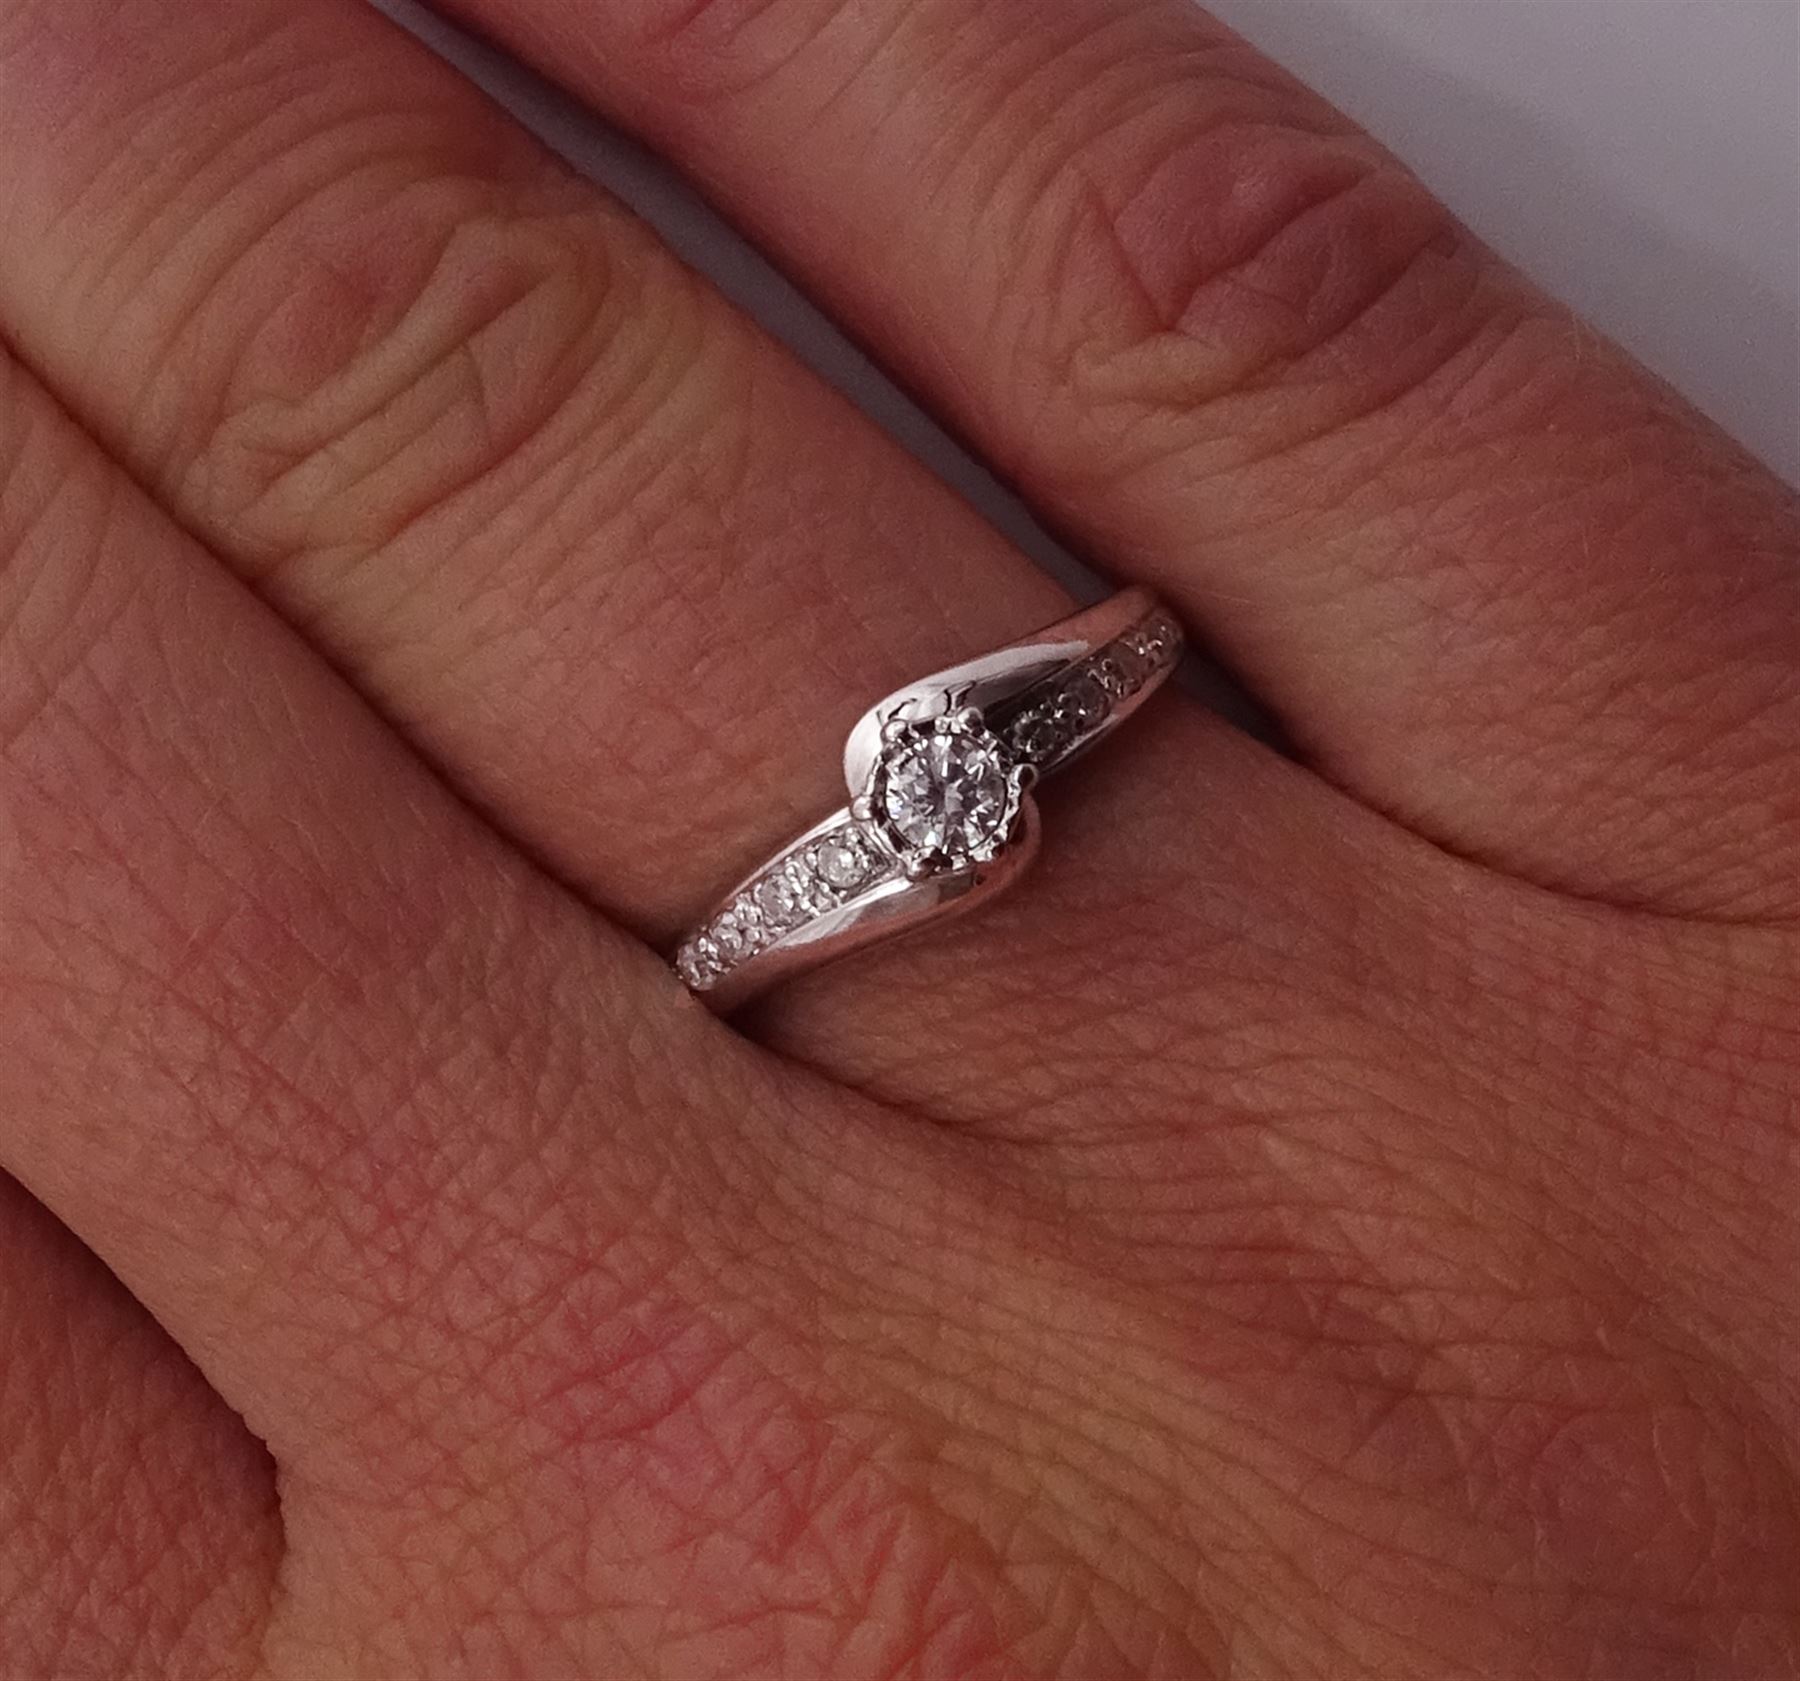 18ct white gold single stone diamond ring - Image 2 of 4